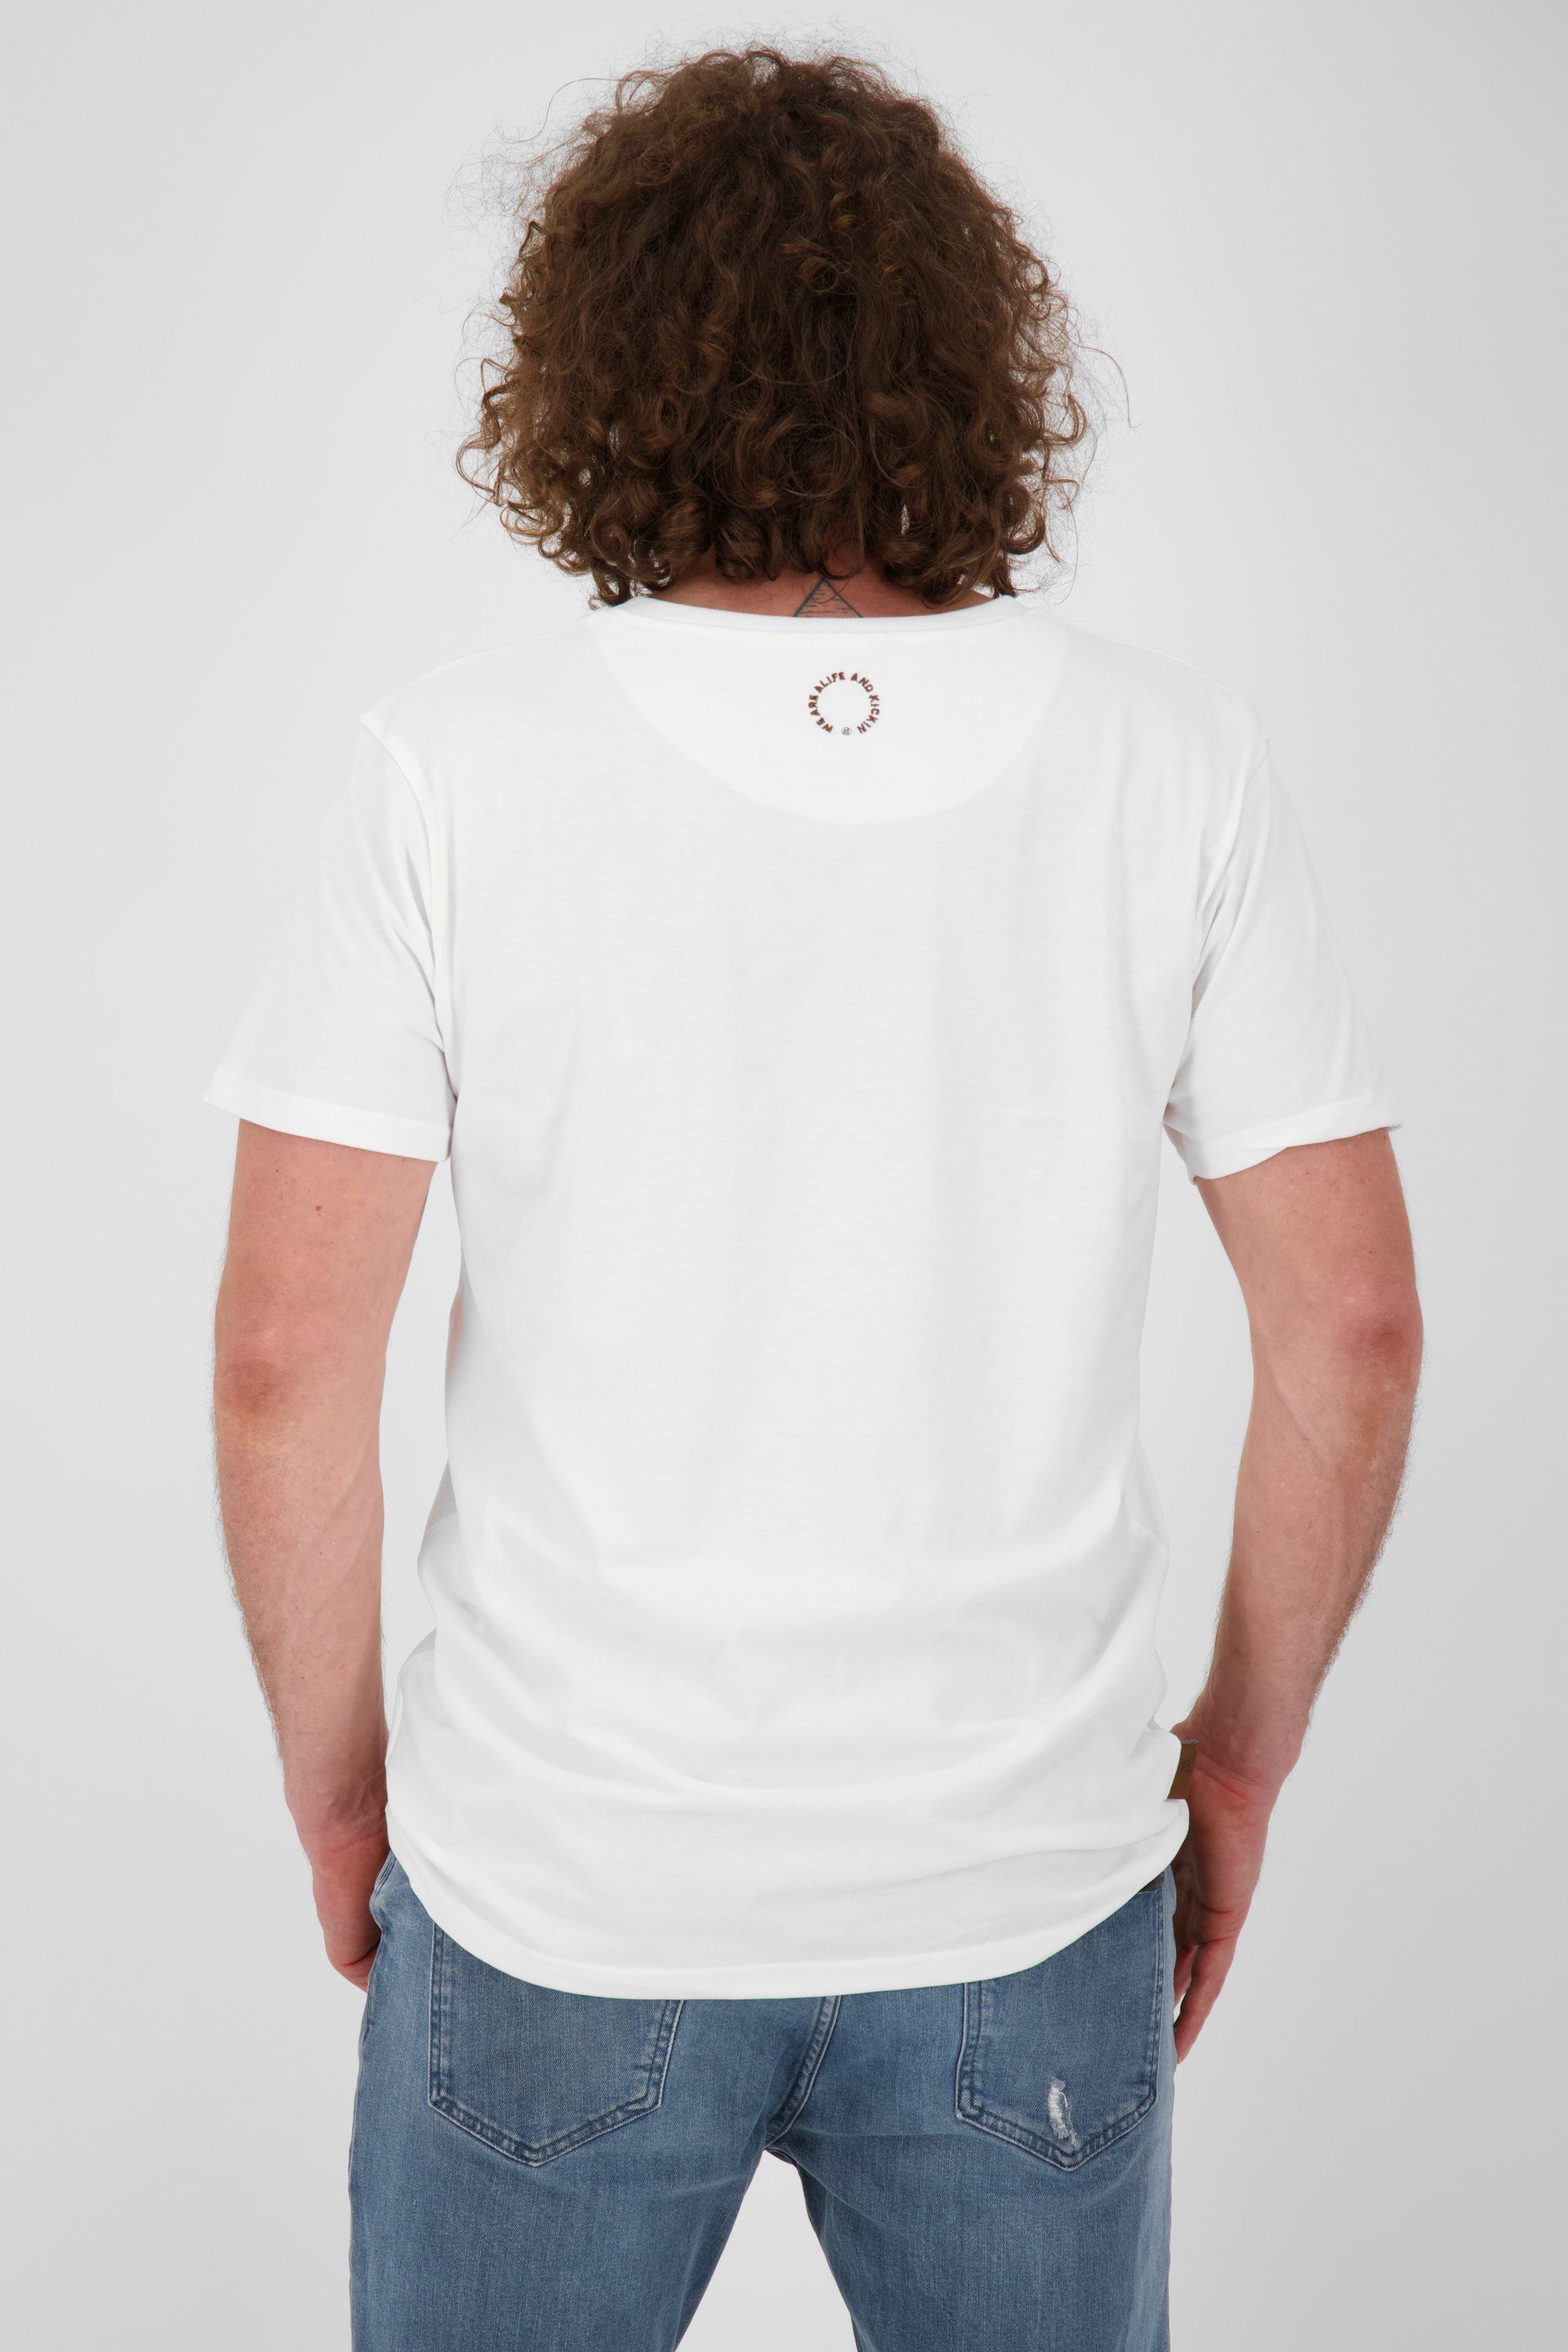 Alife & Herren Kickin cloudy T-Shirt T-Shirt MatsAK